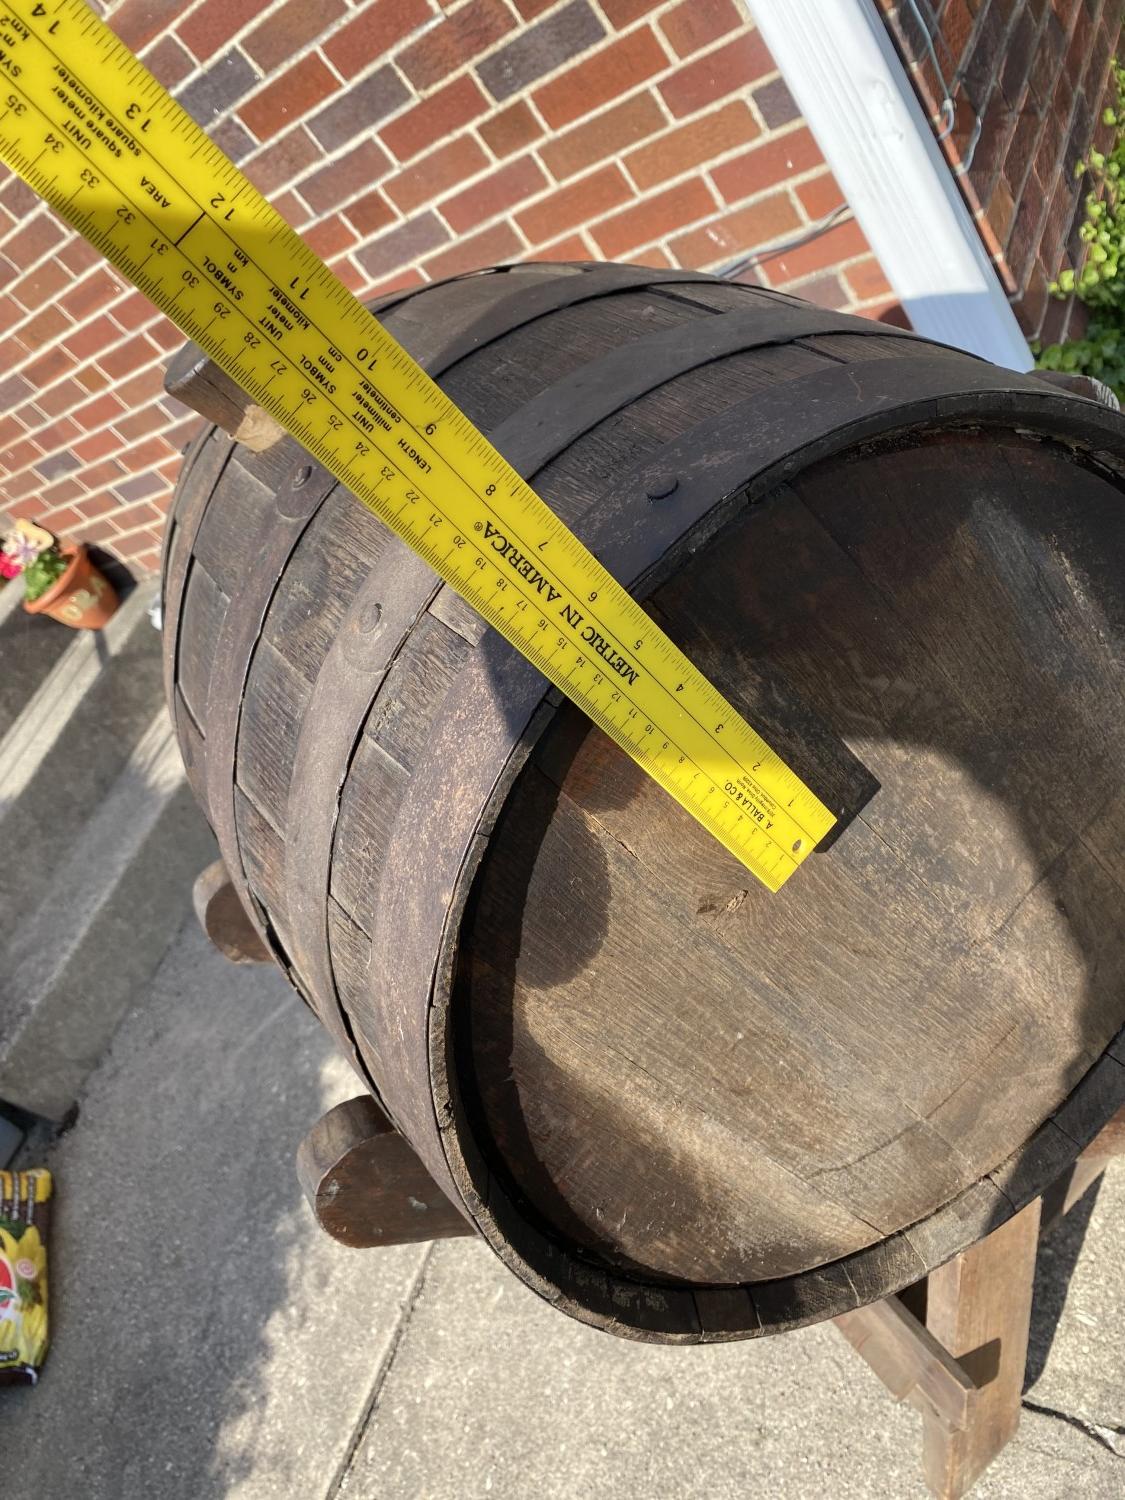 Vintage wine or whiskey barrel on stand